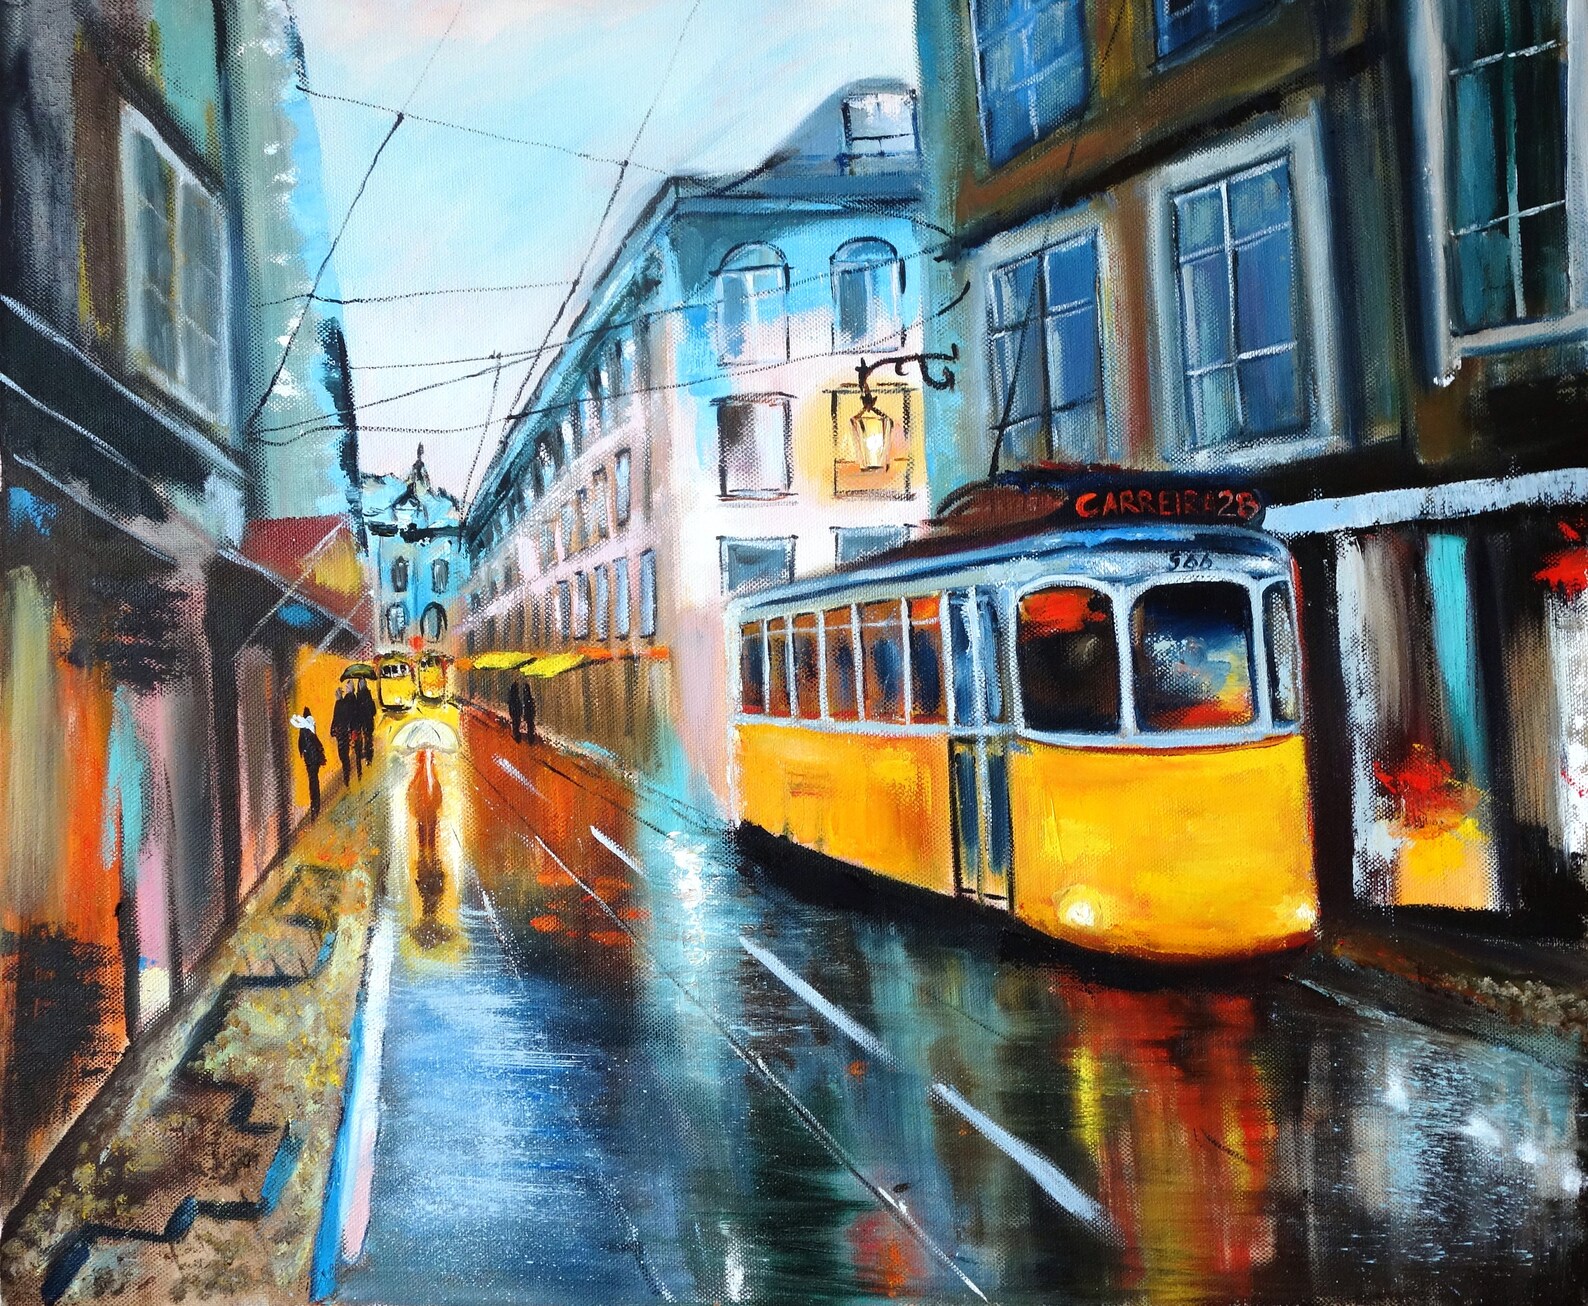 Tram Oil Painting Original Art Lisbon Artwork Cityscape Canvas Etsy